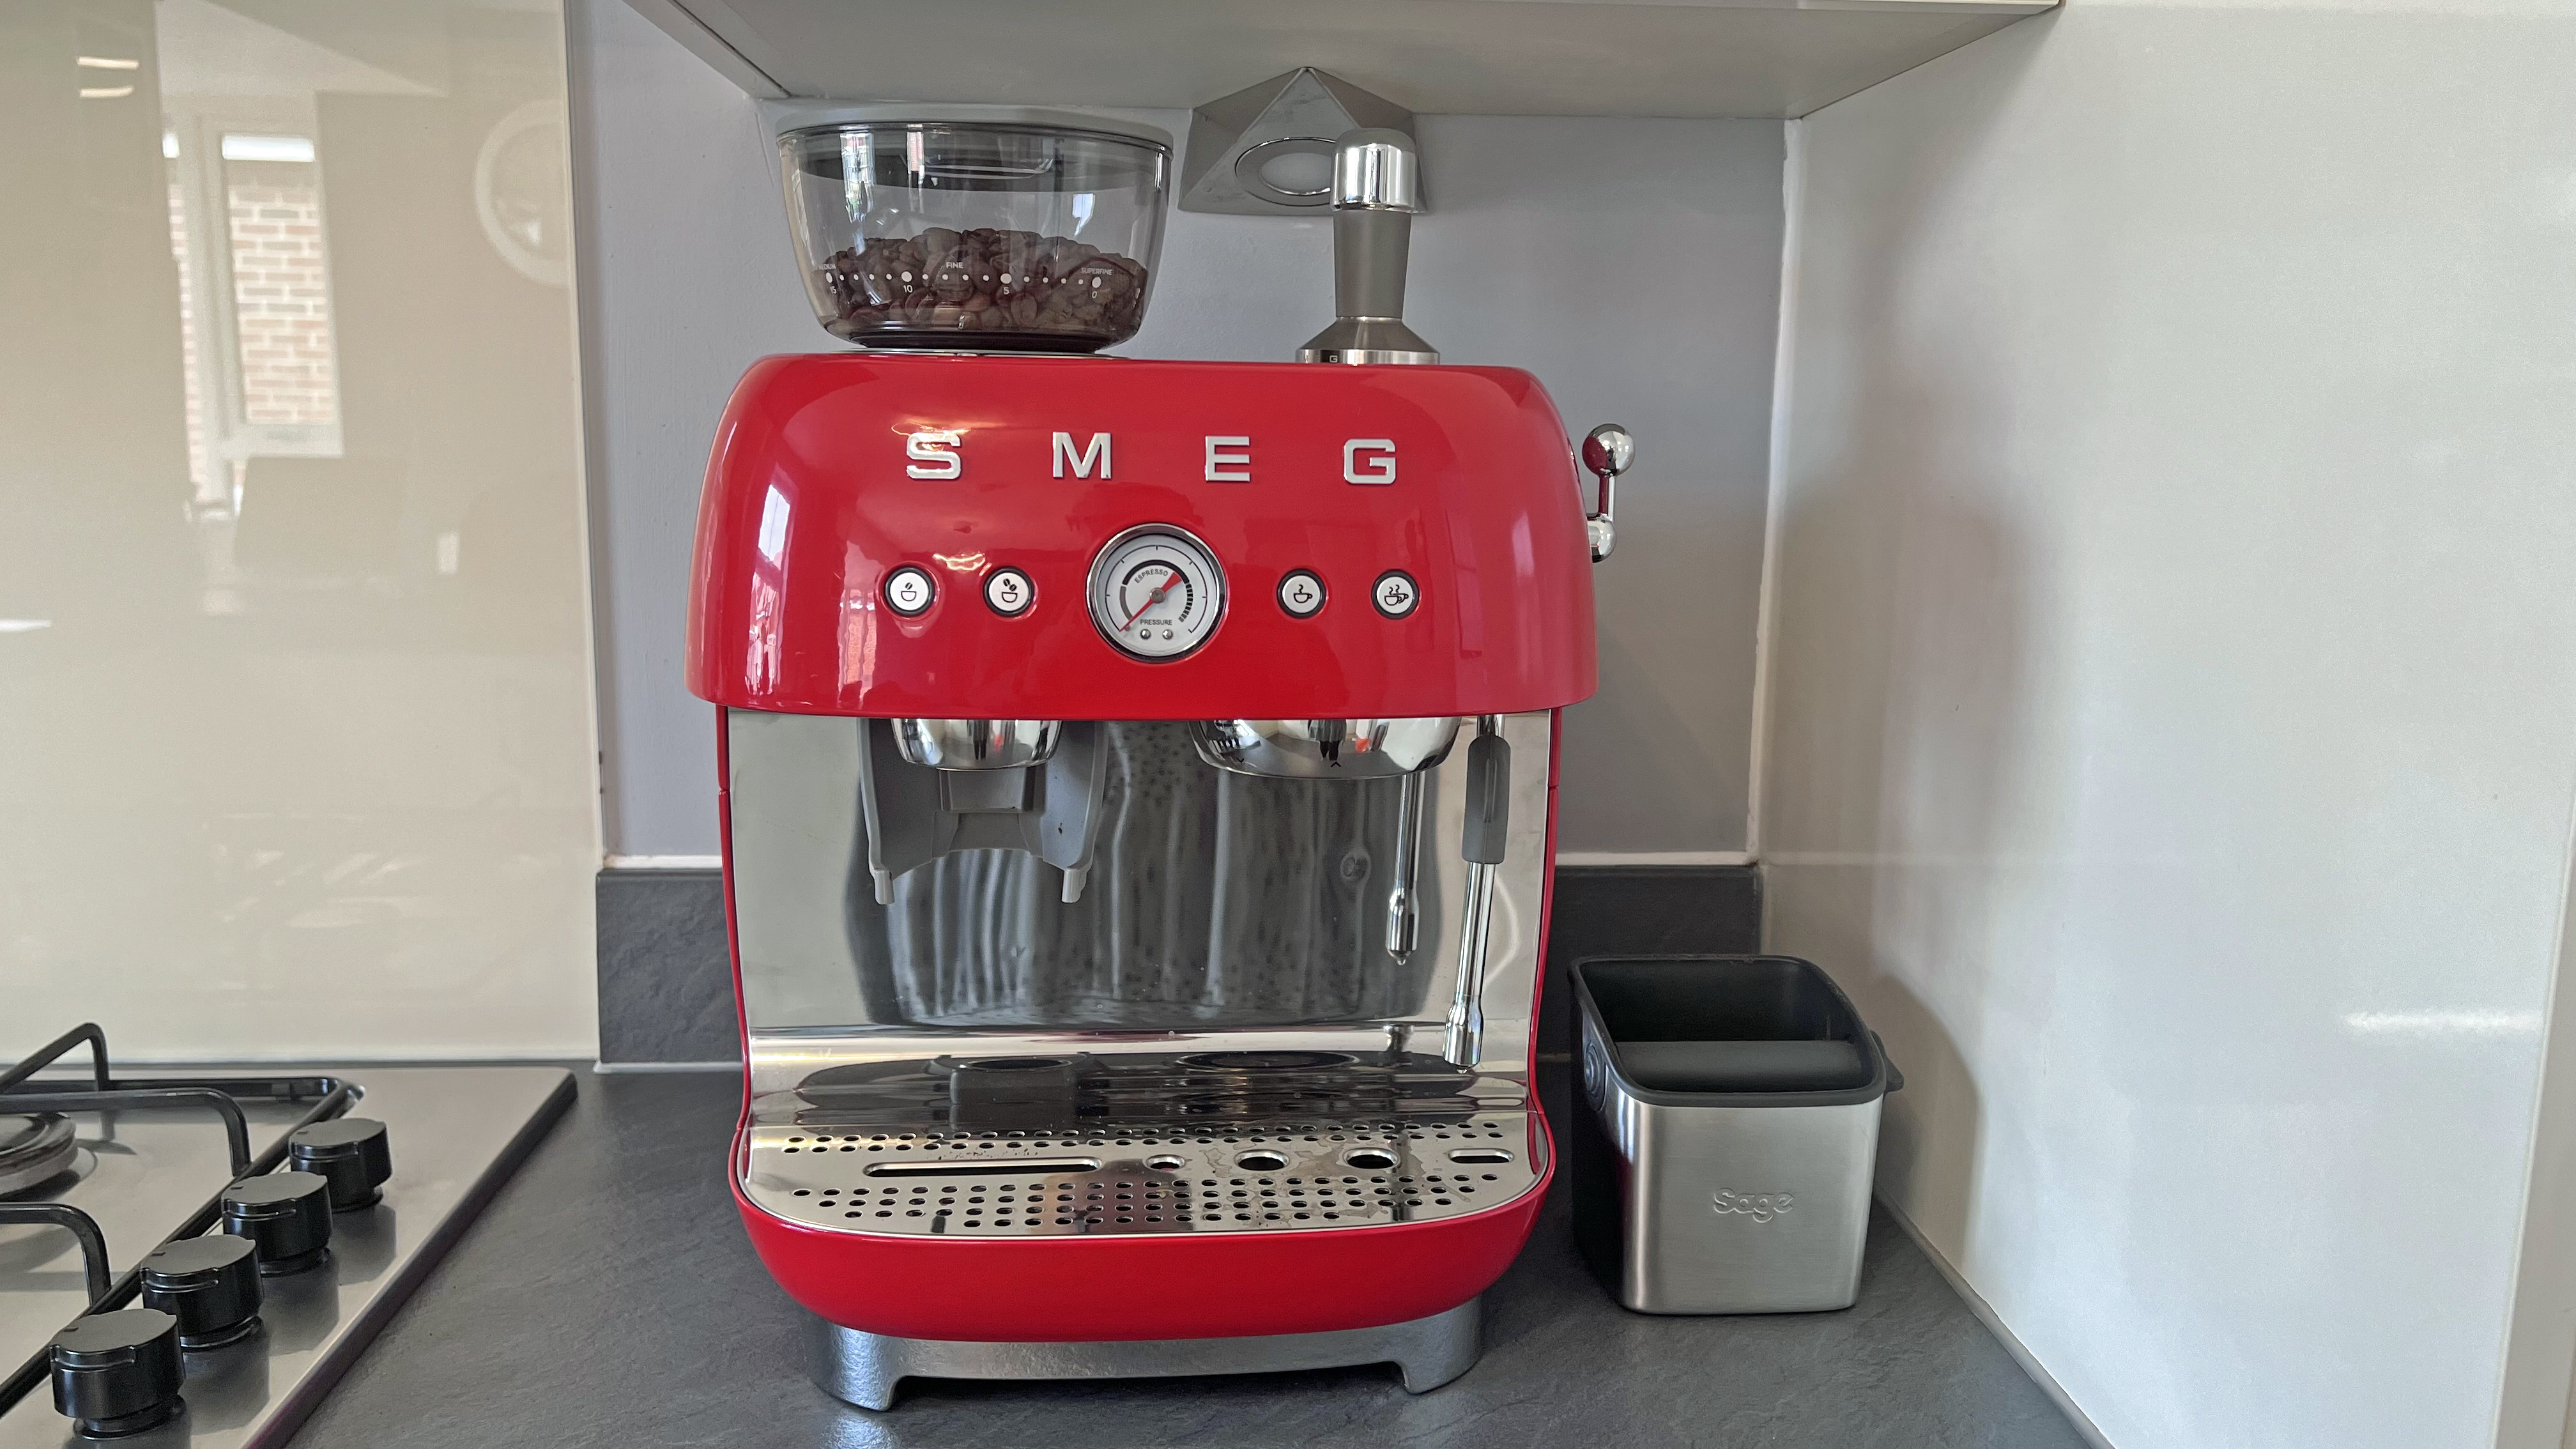 Smeg Coffee Grinder Review